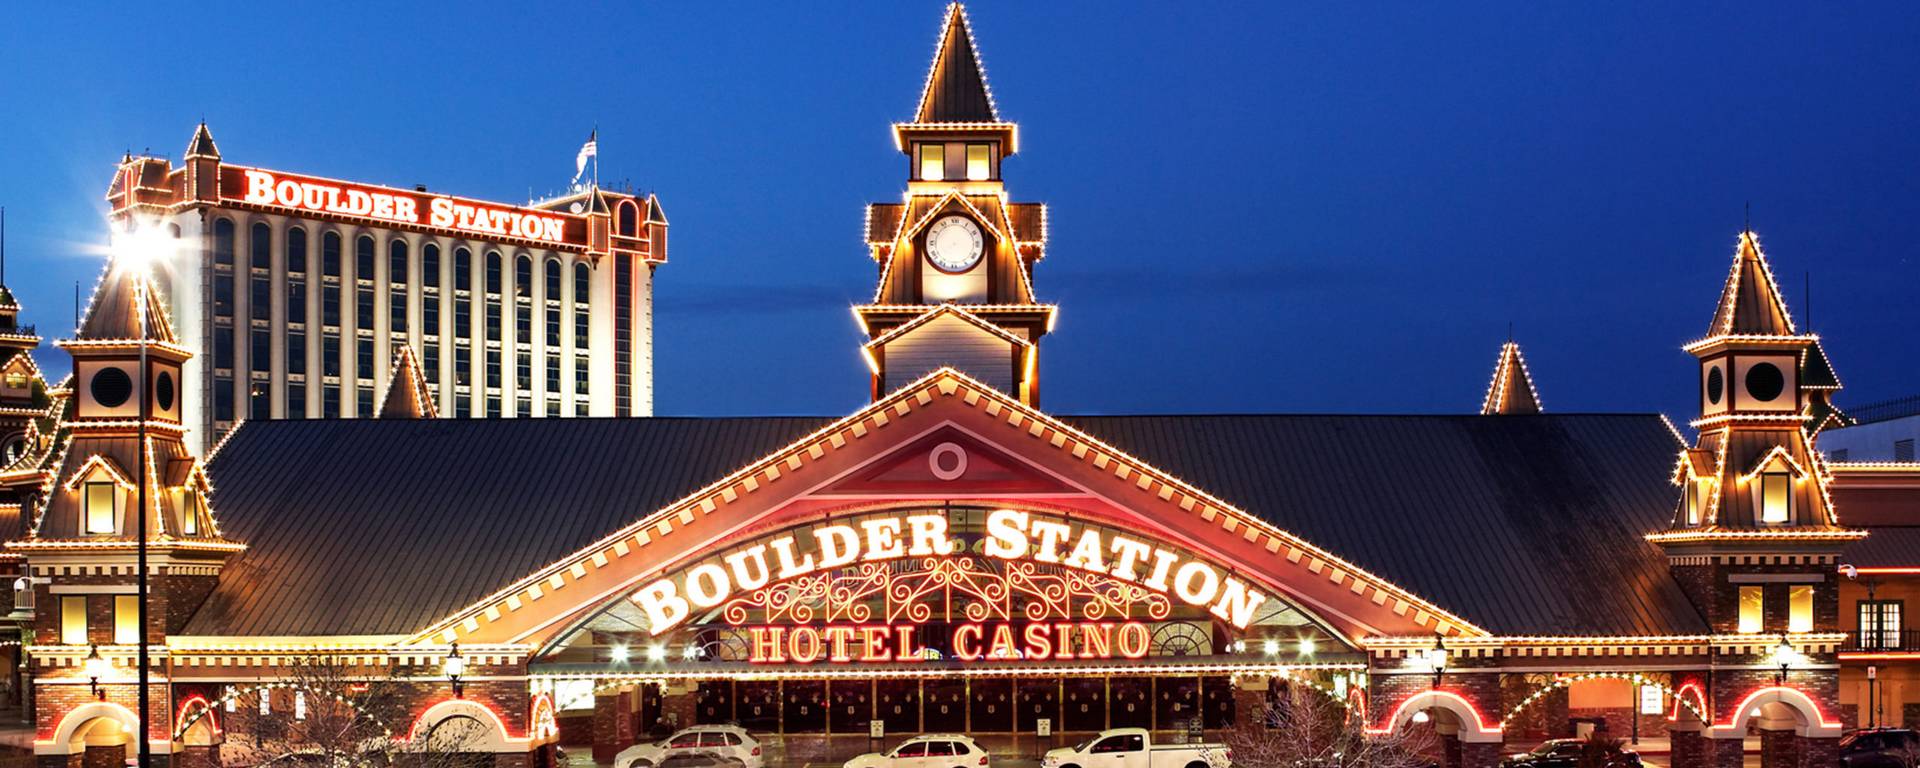 boulder station hotel casino military